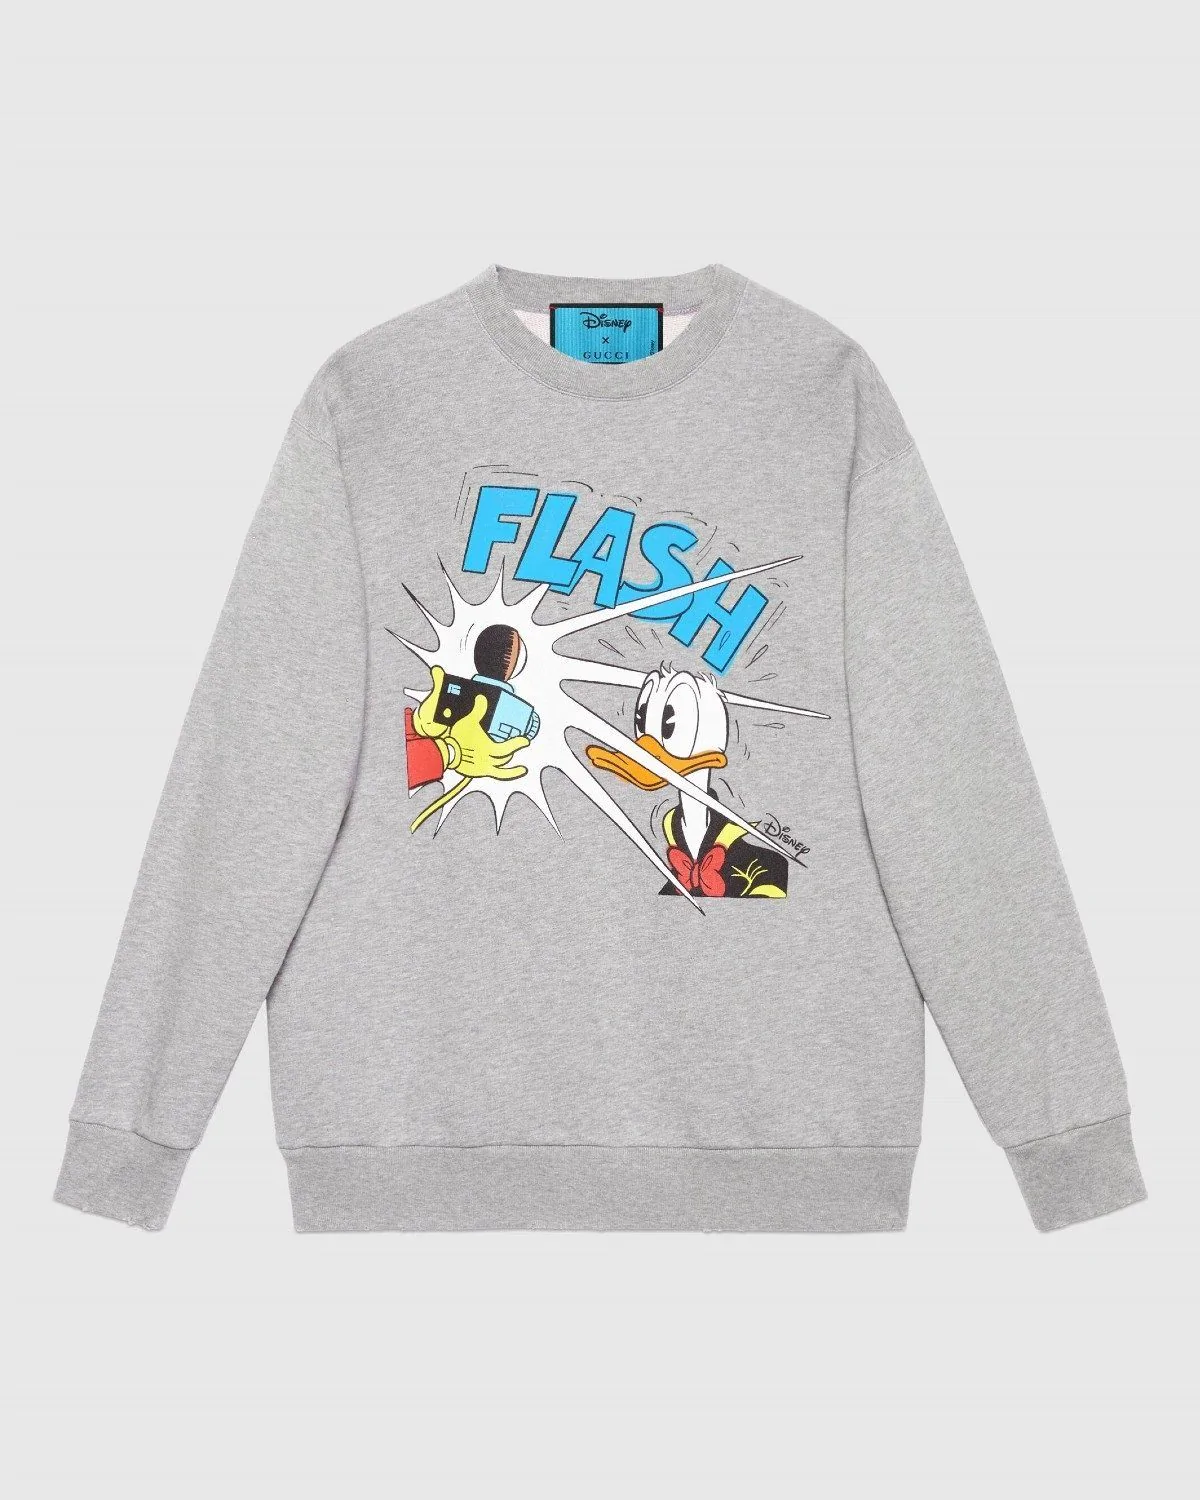 Gucci X Disney Donald Duck Sweatshirt